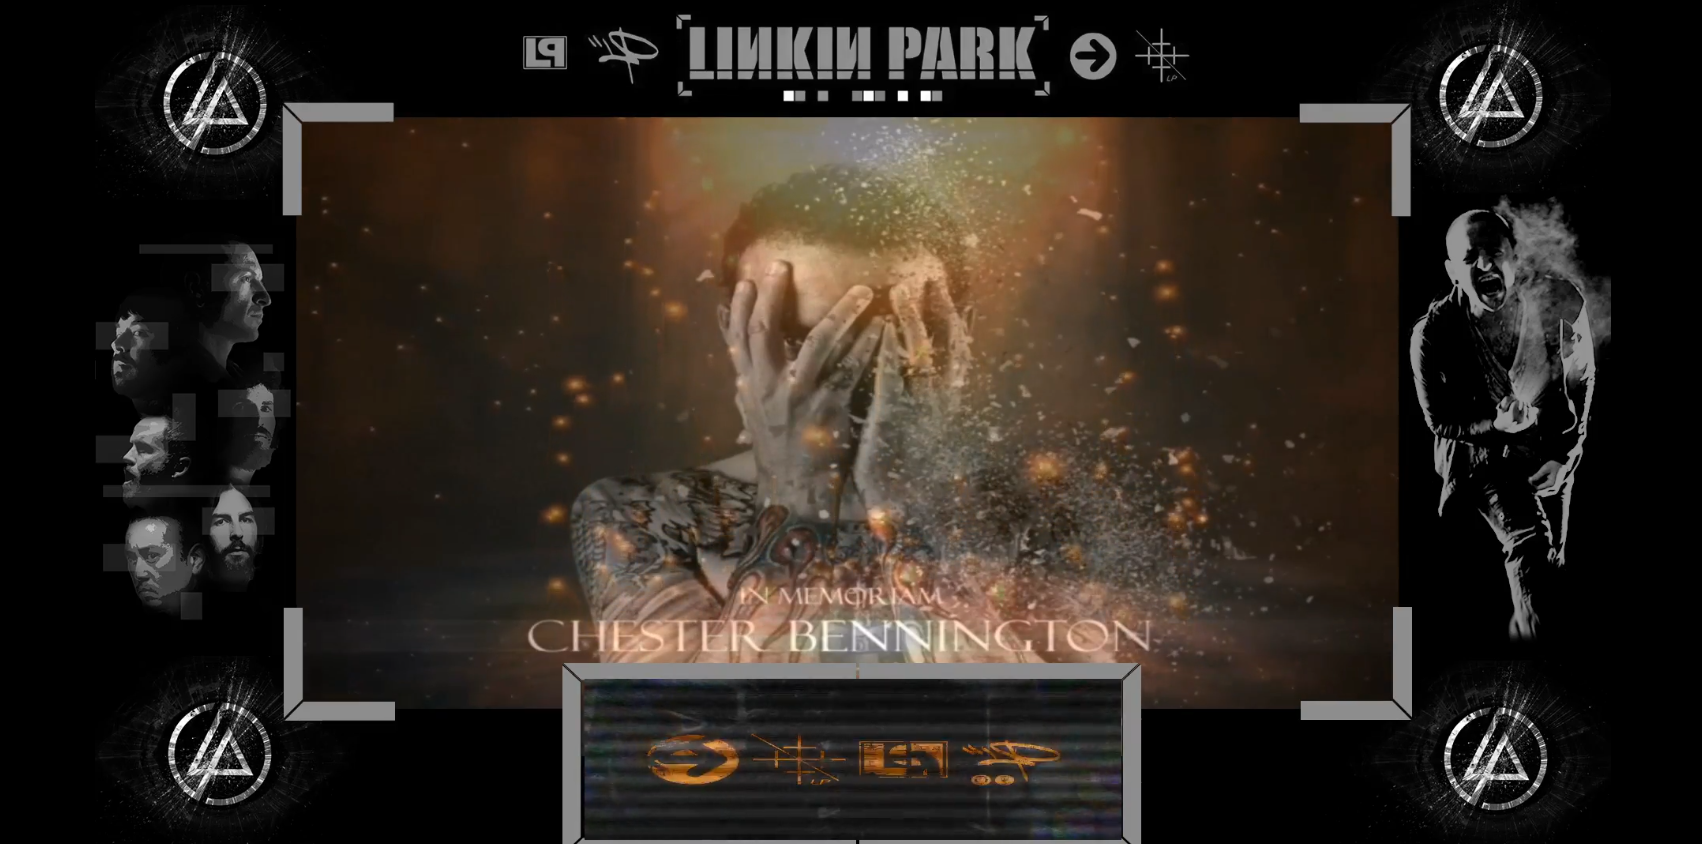 Linkin Park Video Pupuck